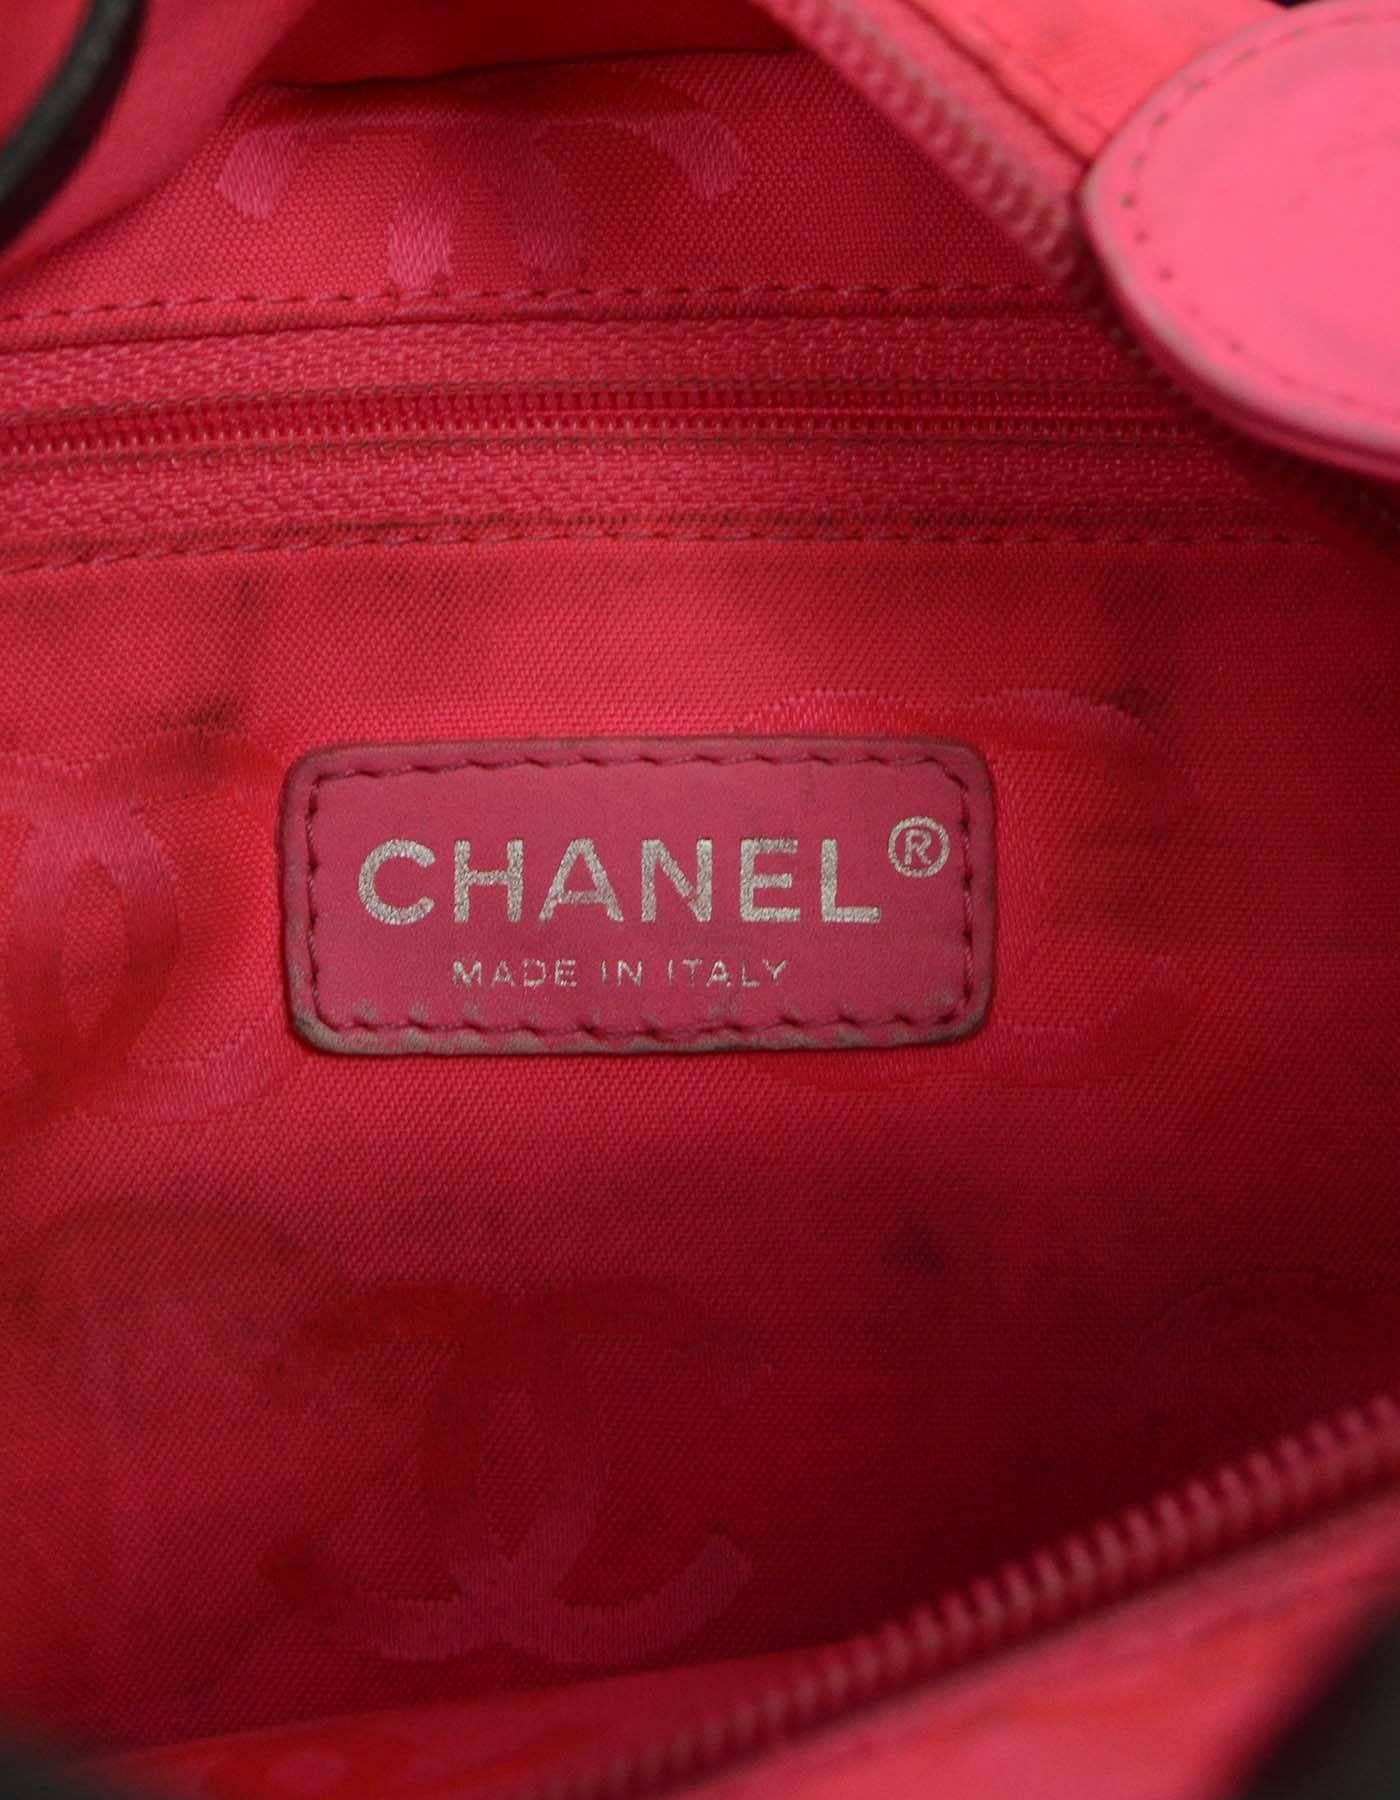 Chanel Black & White Leather Cambon Tote Bag SHW 4